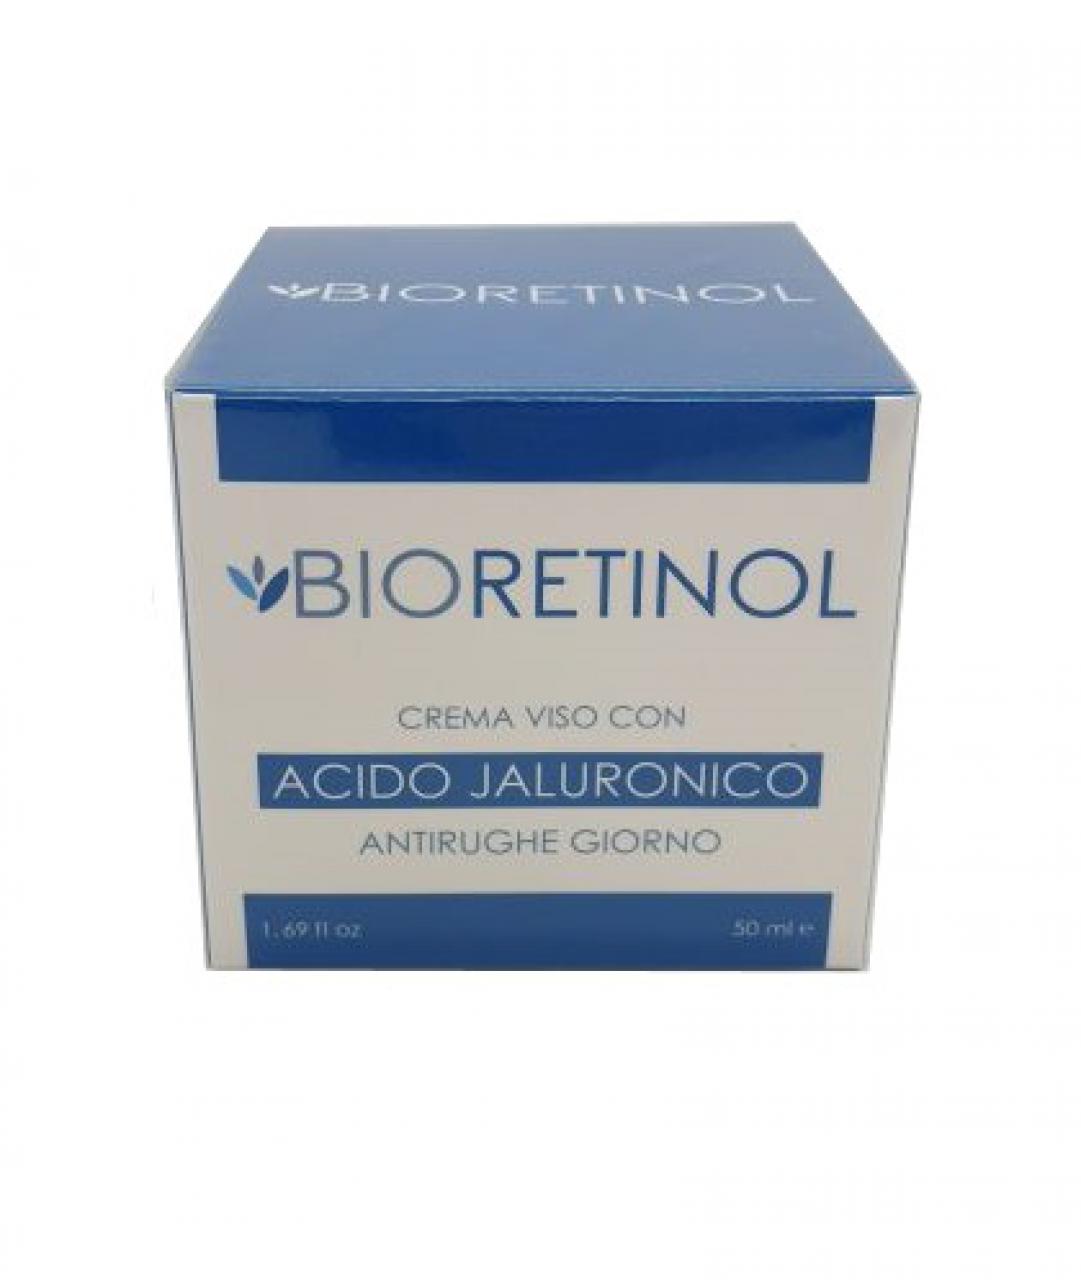 Bioretinol acido jaluronico